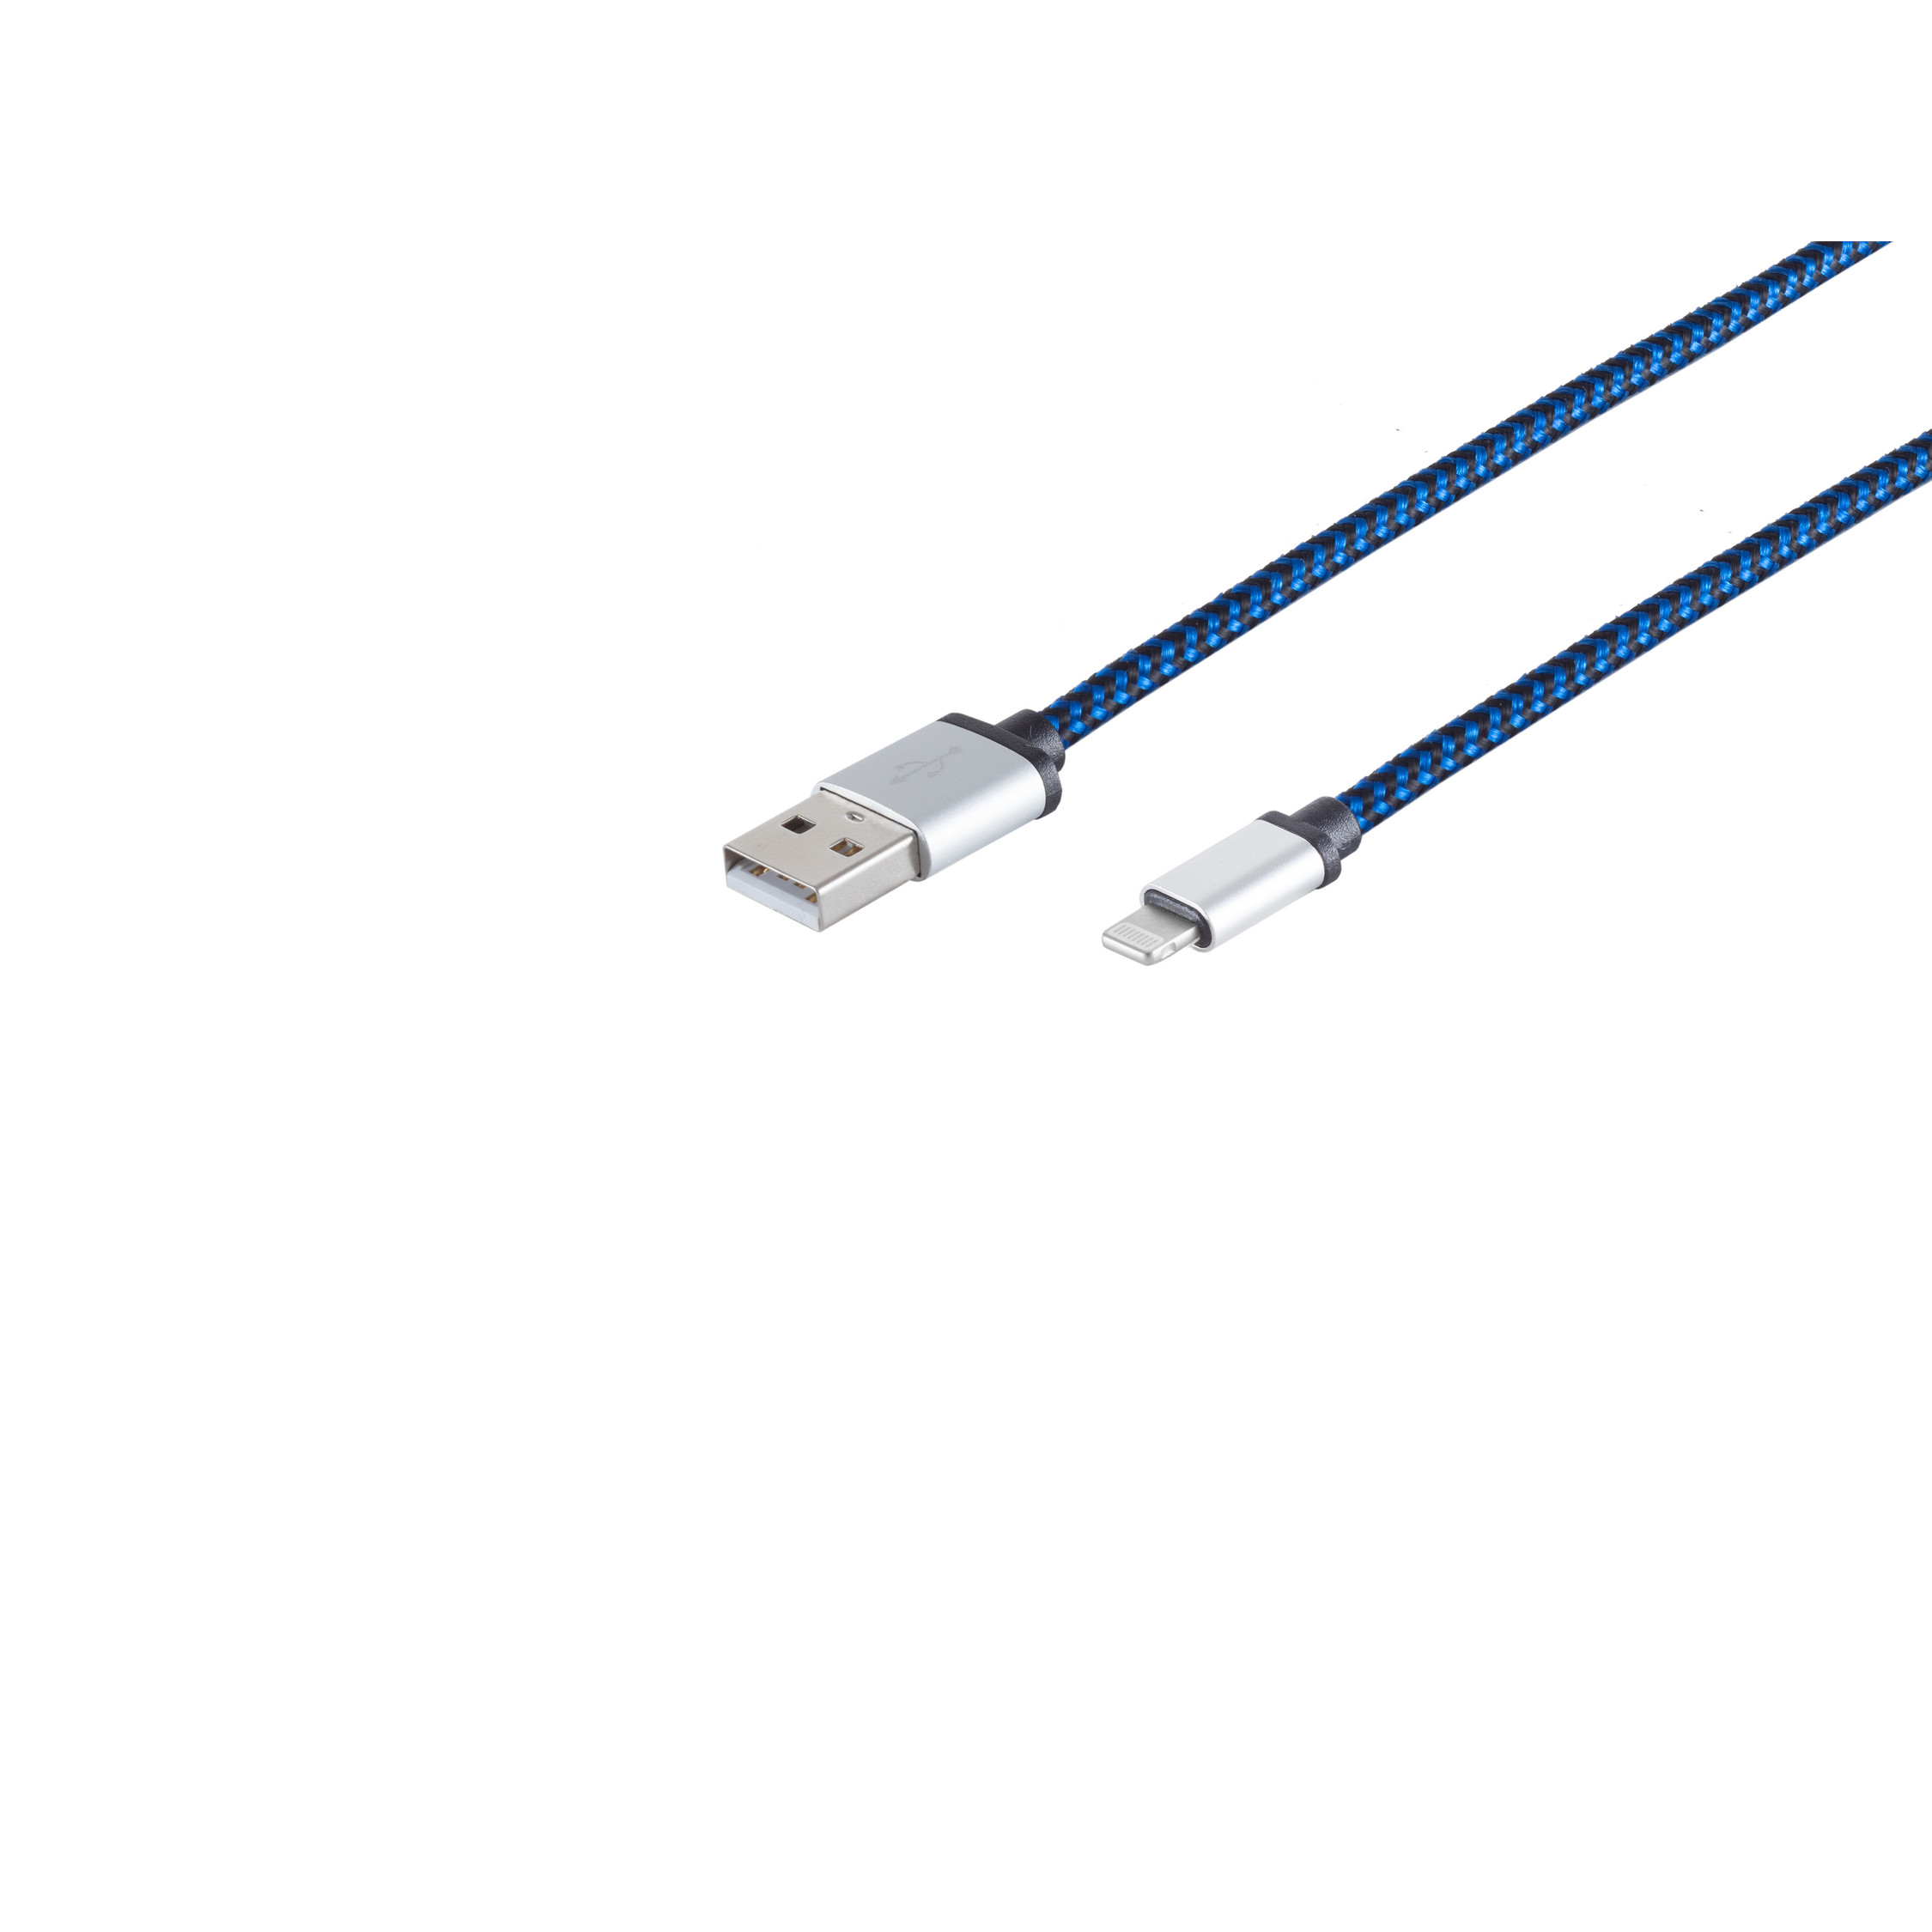 A 0,9m MAXIMUM Kabel Stecker Stecker auf 8-pin S/CONN CONNECTIVITY USB-Ladekabel USB